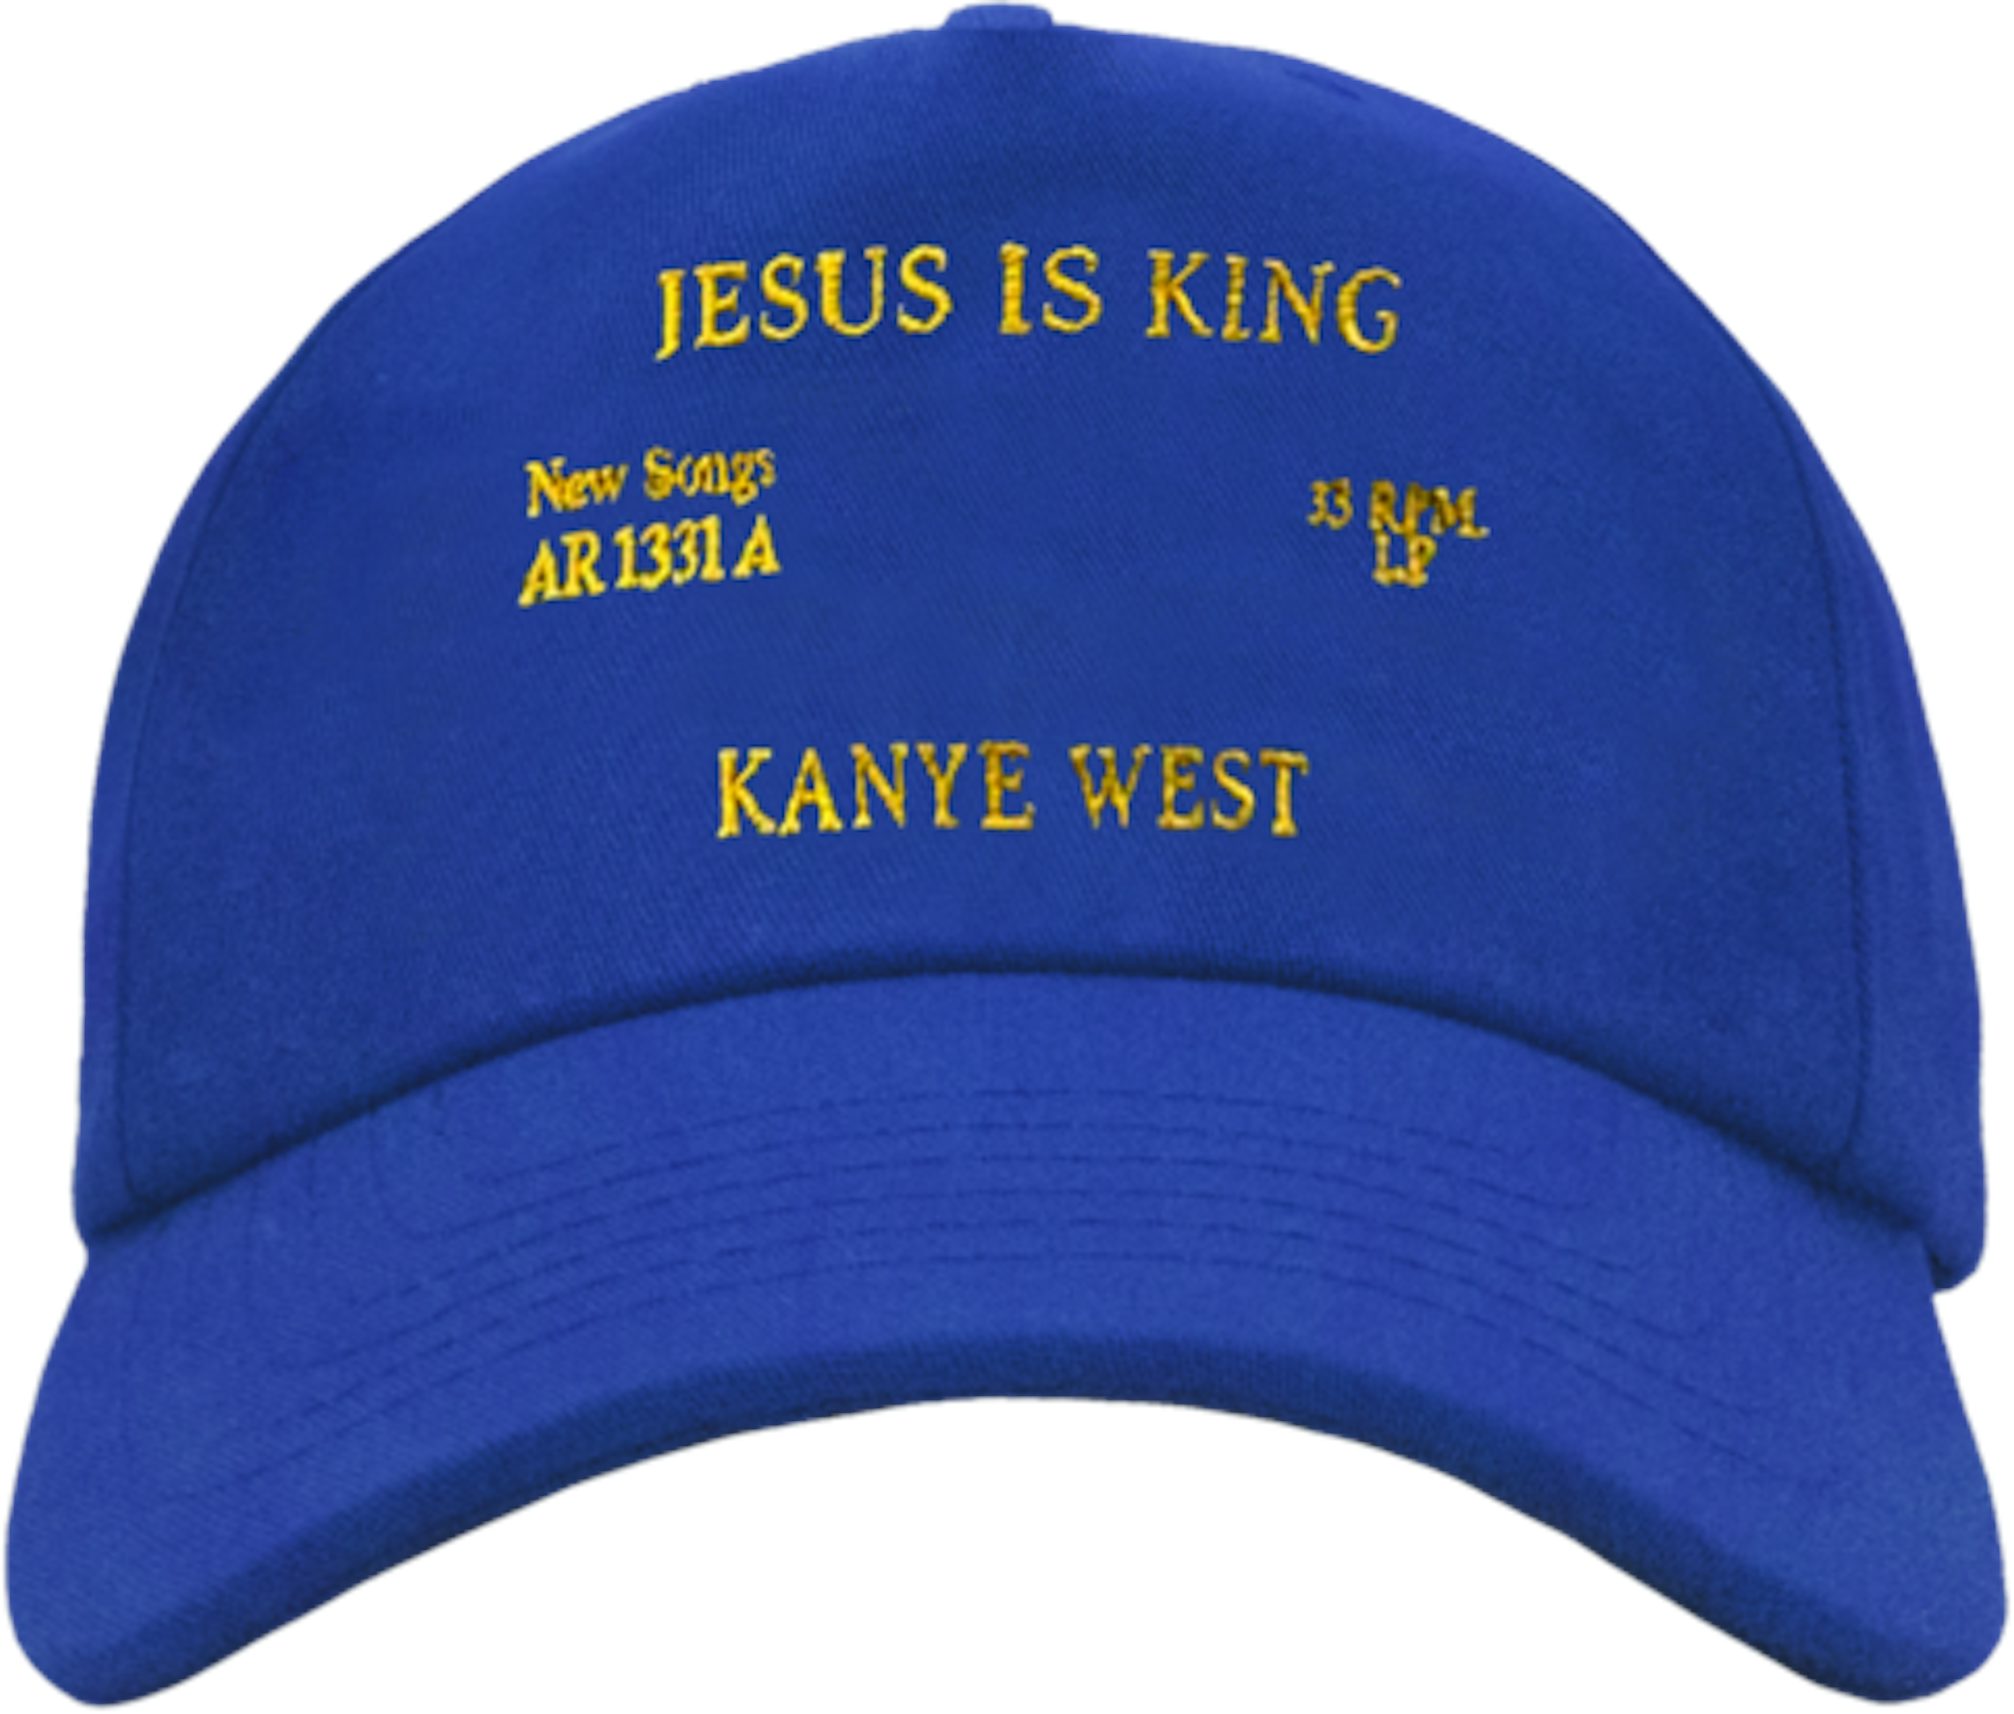 kanye west jesus is king cap